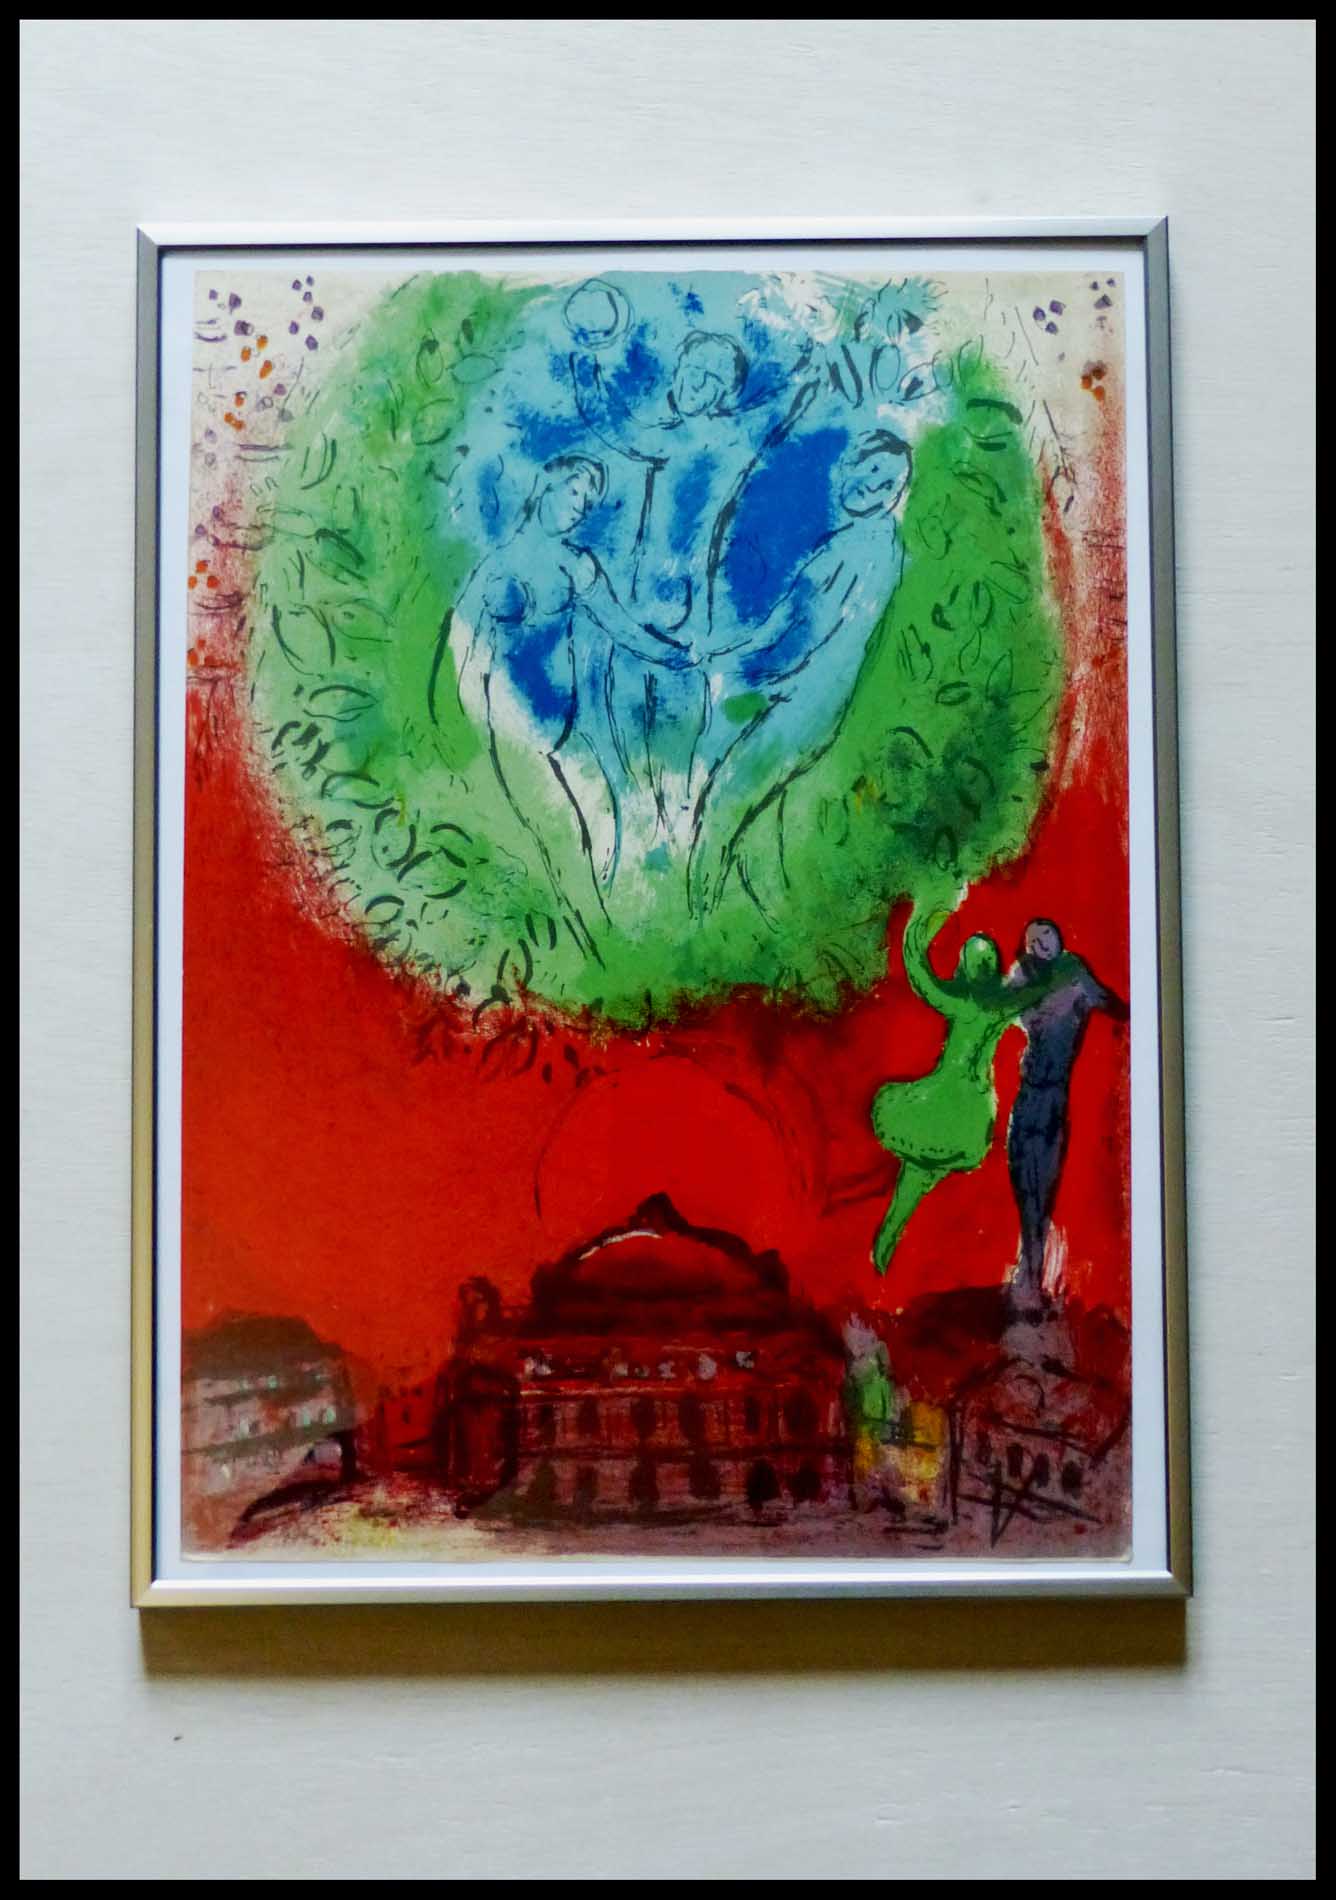 alt=("Marc CHAGALL, Opéra Garnier, DLM 1954, Paris fantastique, printed by Mourlot, original lithograph")